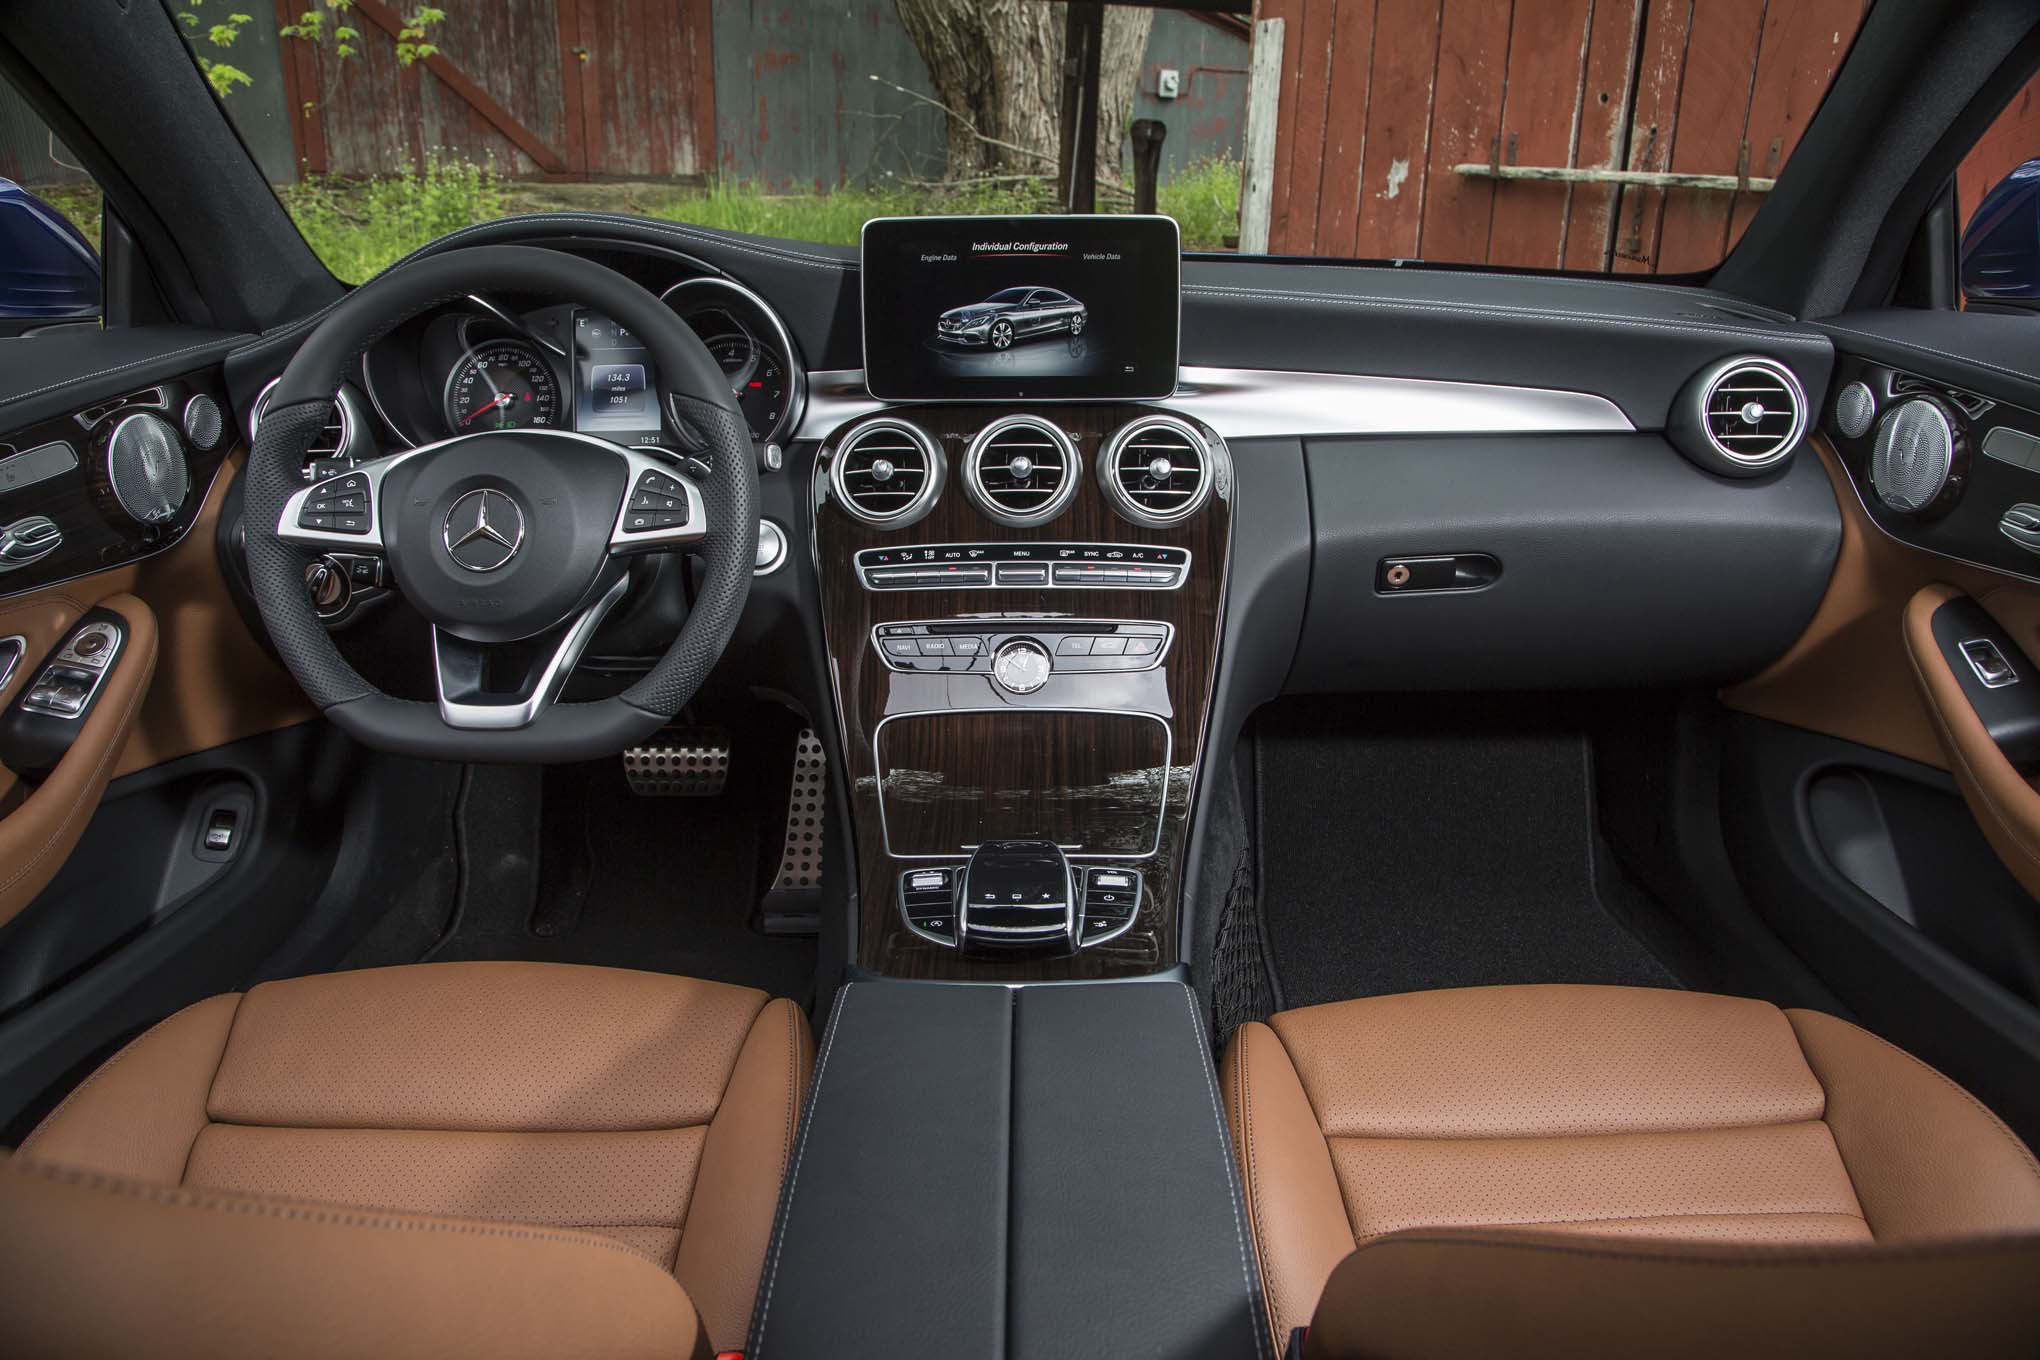 2017-Mercedes-Benz-C300-coupe-interior-view-03.jpg